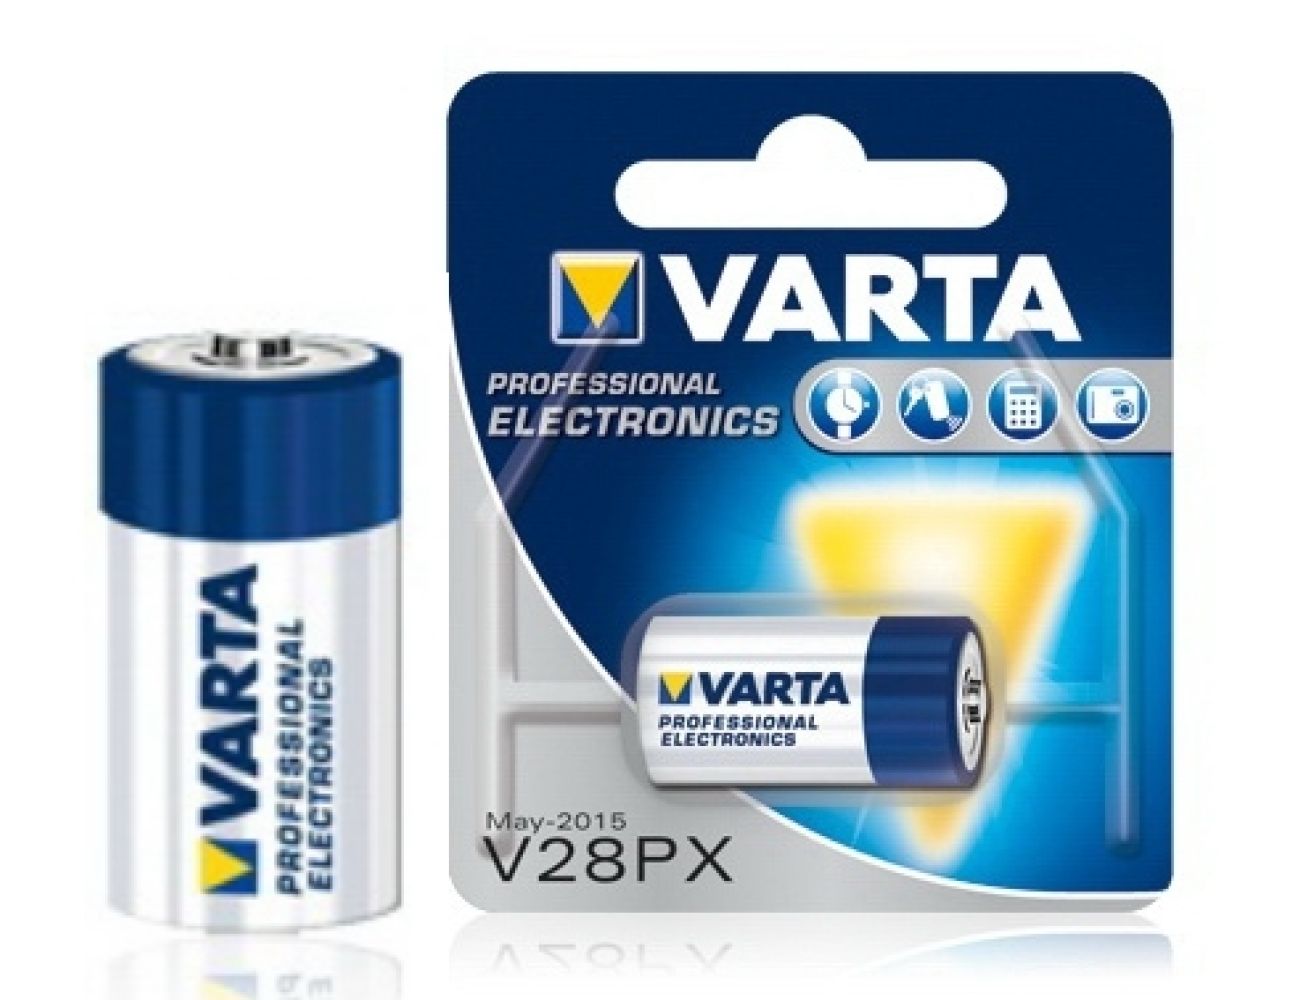 Батарейка Varta V28PX Professional Electronics (4SR44, 145mAh, 6.2V, Alkaline Щелочная) 04028101401